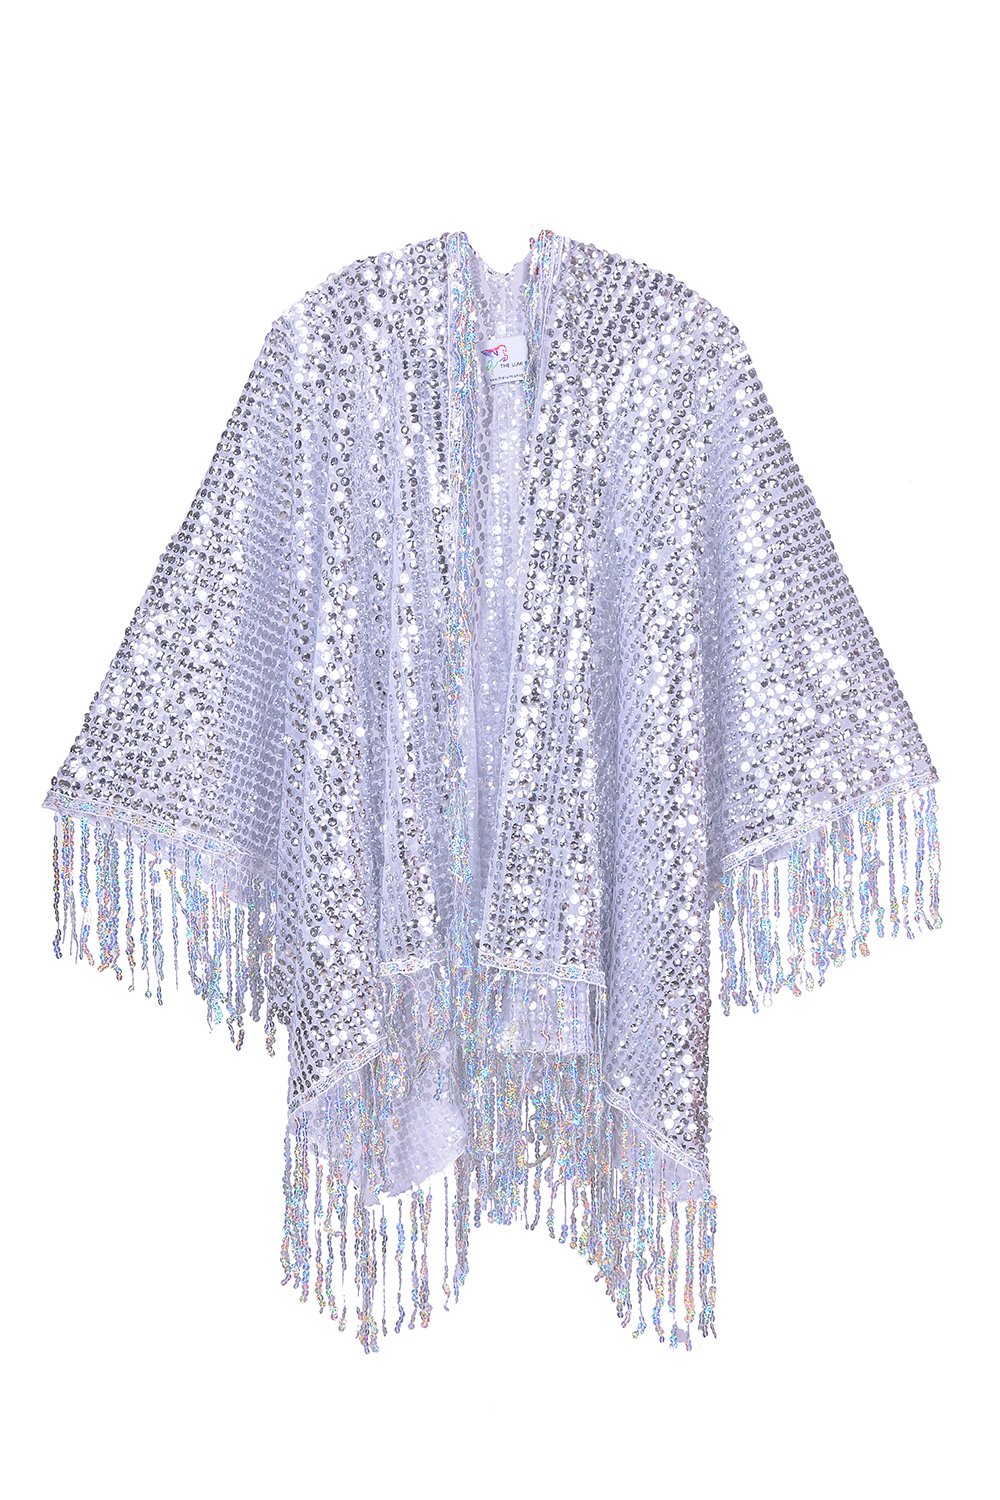 Sequin Kimono - Silver Sparkle